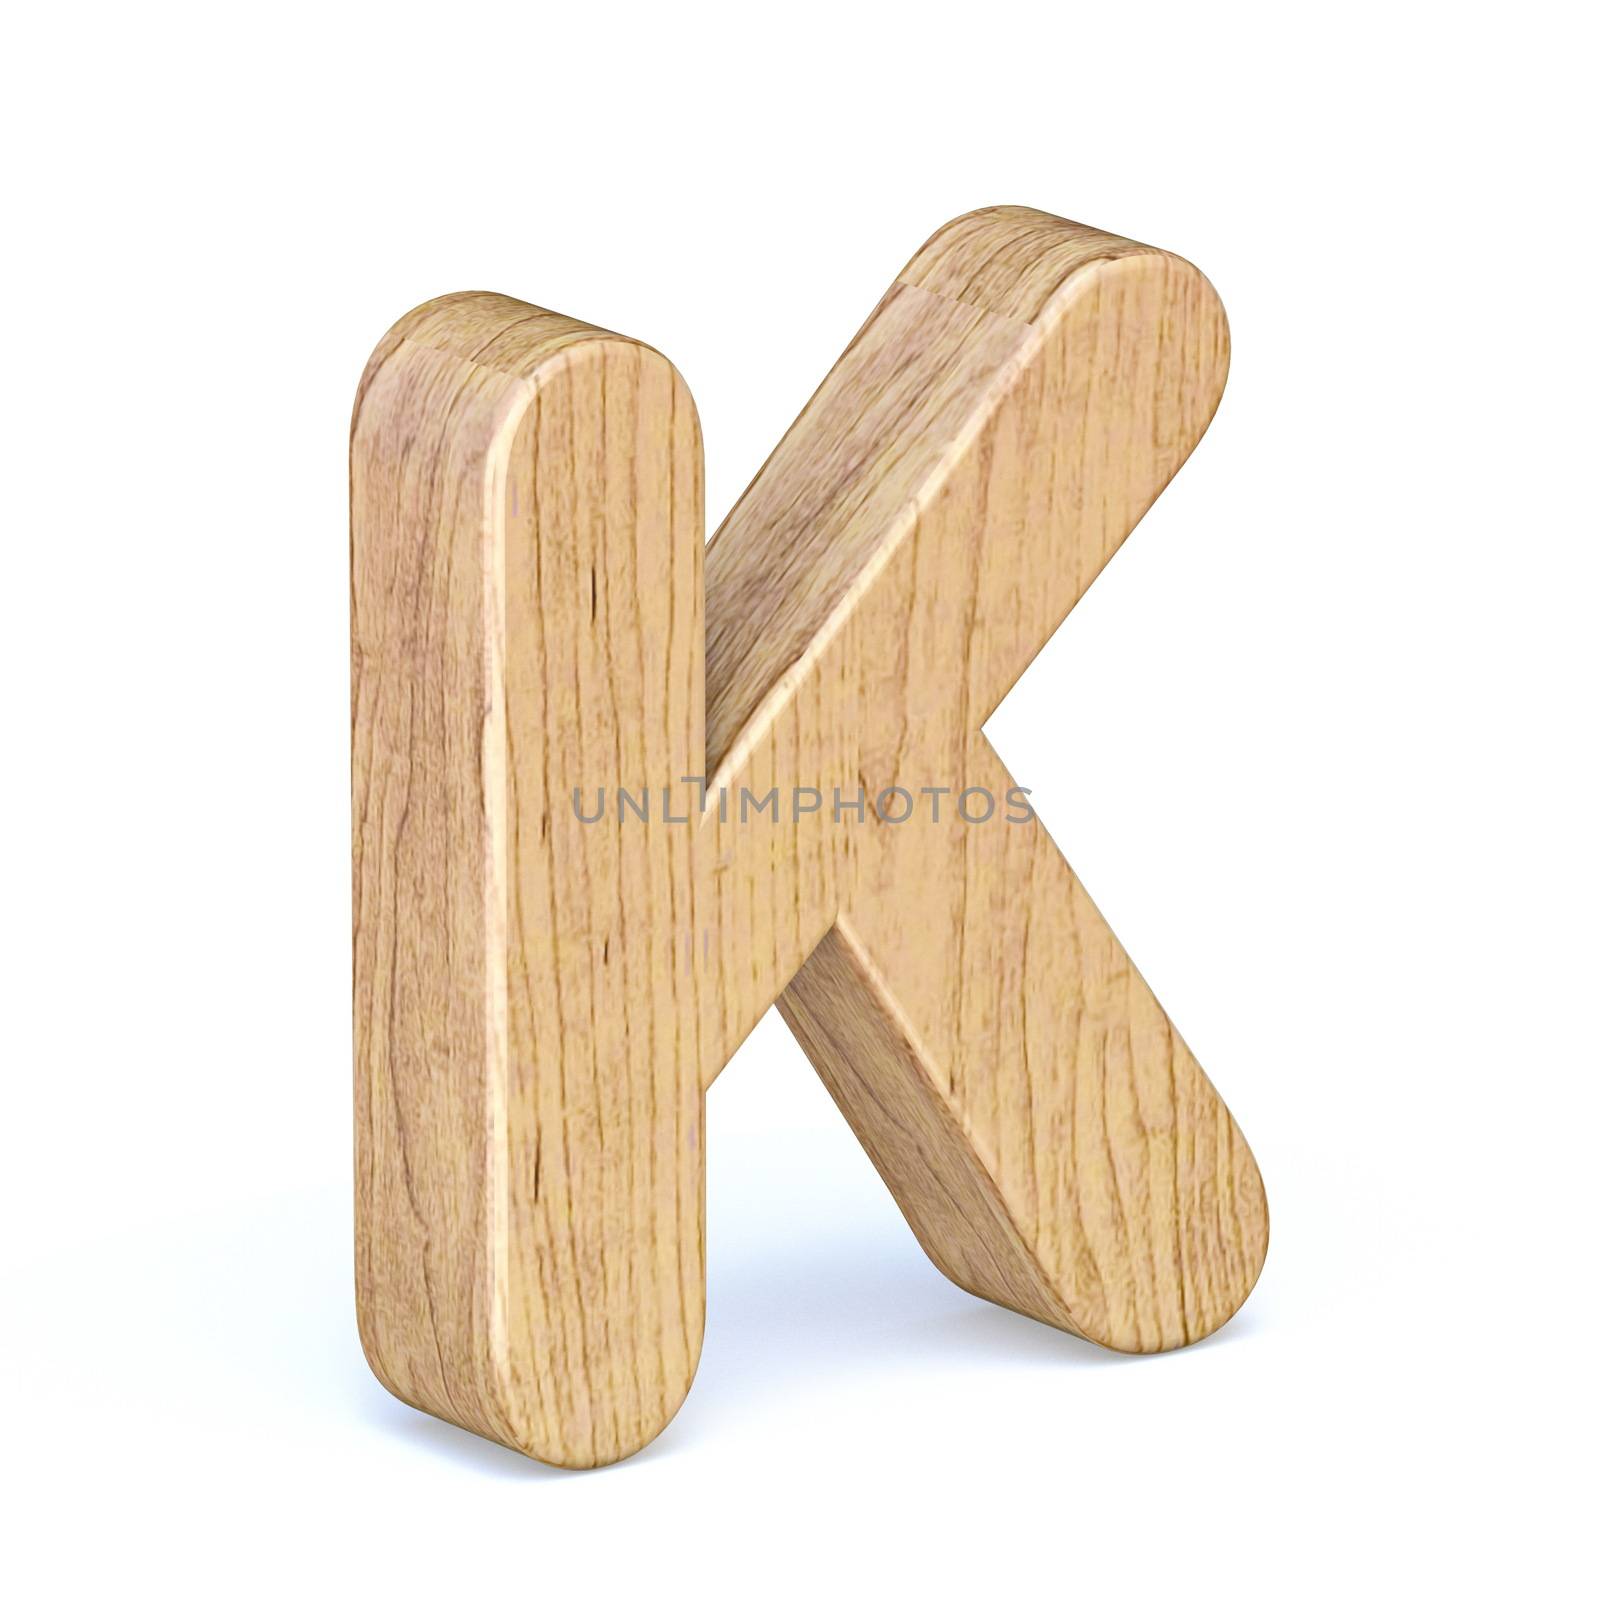 Rounded wooden font Letter K 3D by djmilic